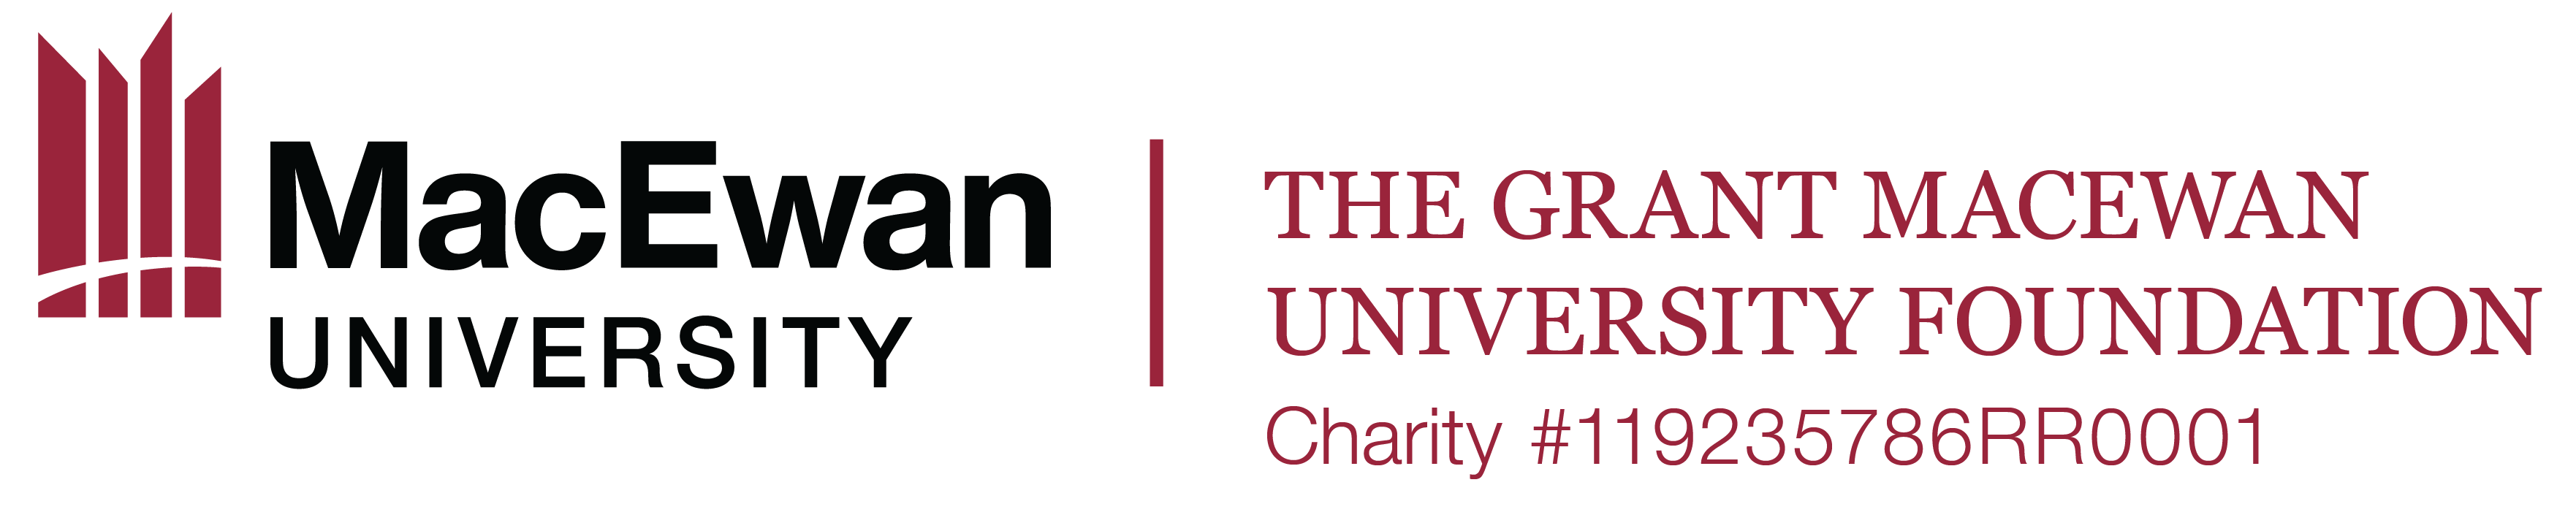 Grant MacEwan University Foundation Logo